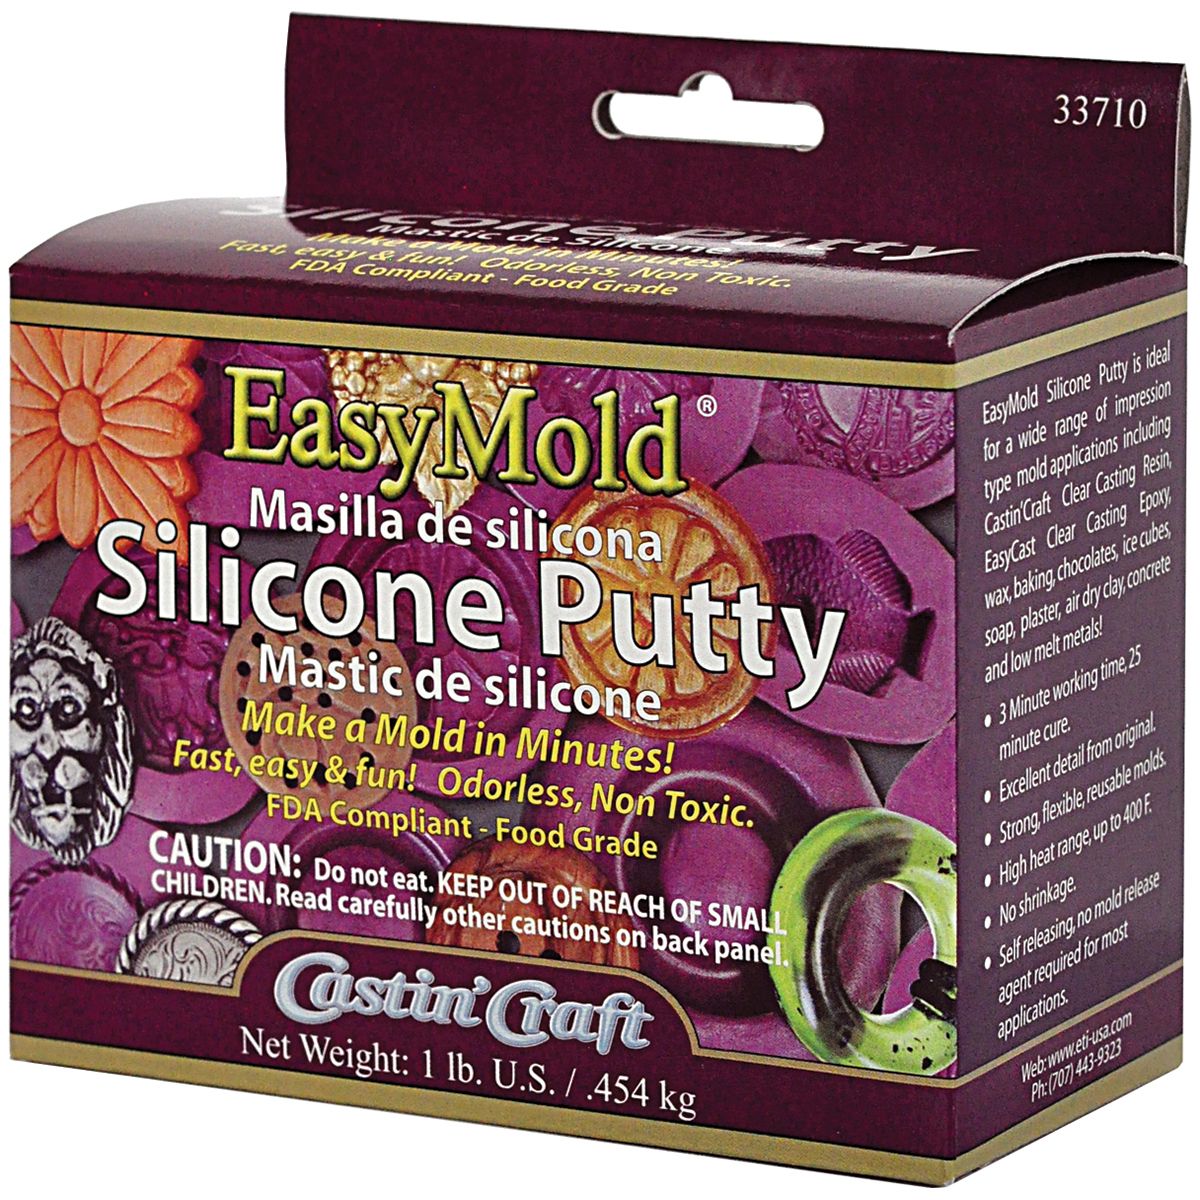 Castin'Craft EasyMold Silicone Putty .5lb